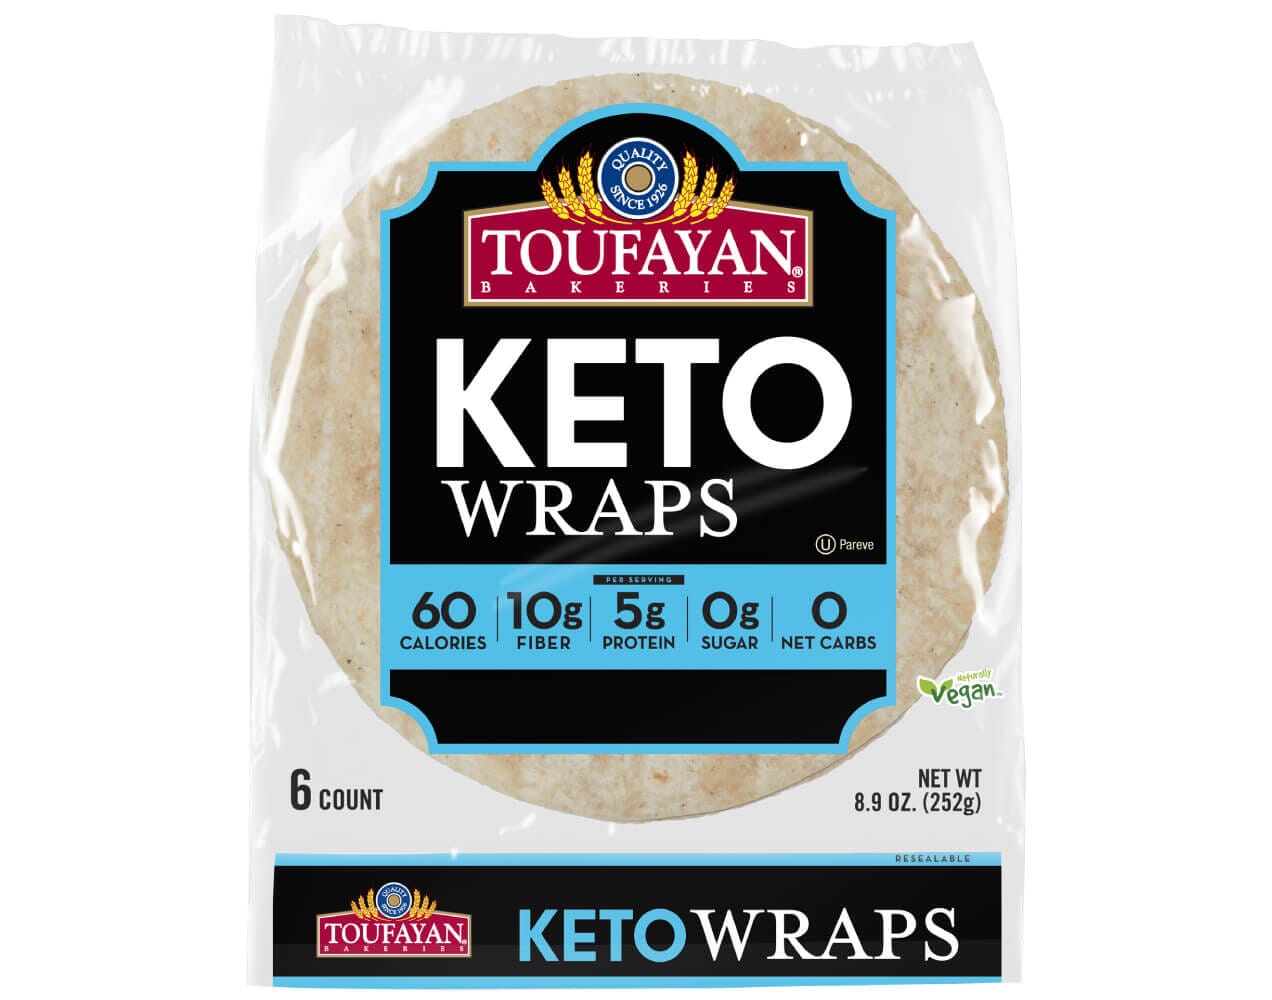 keto wrap product image R1 1222